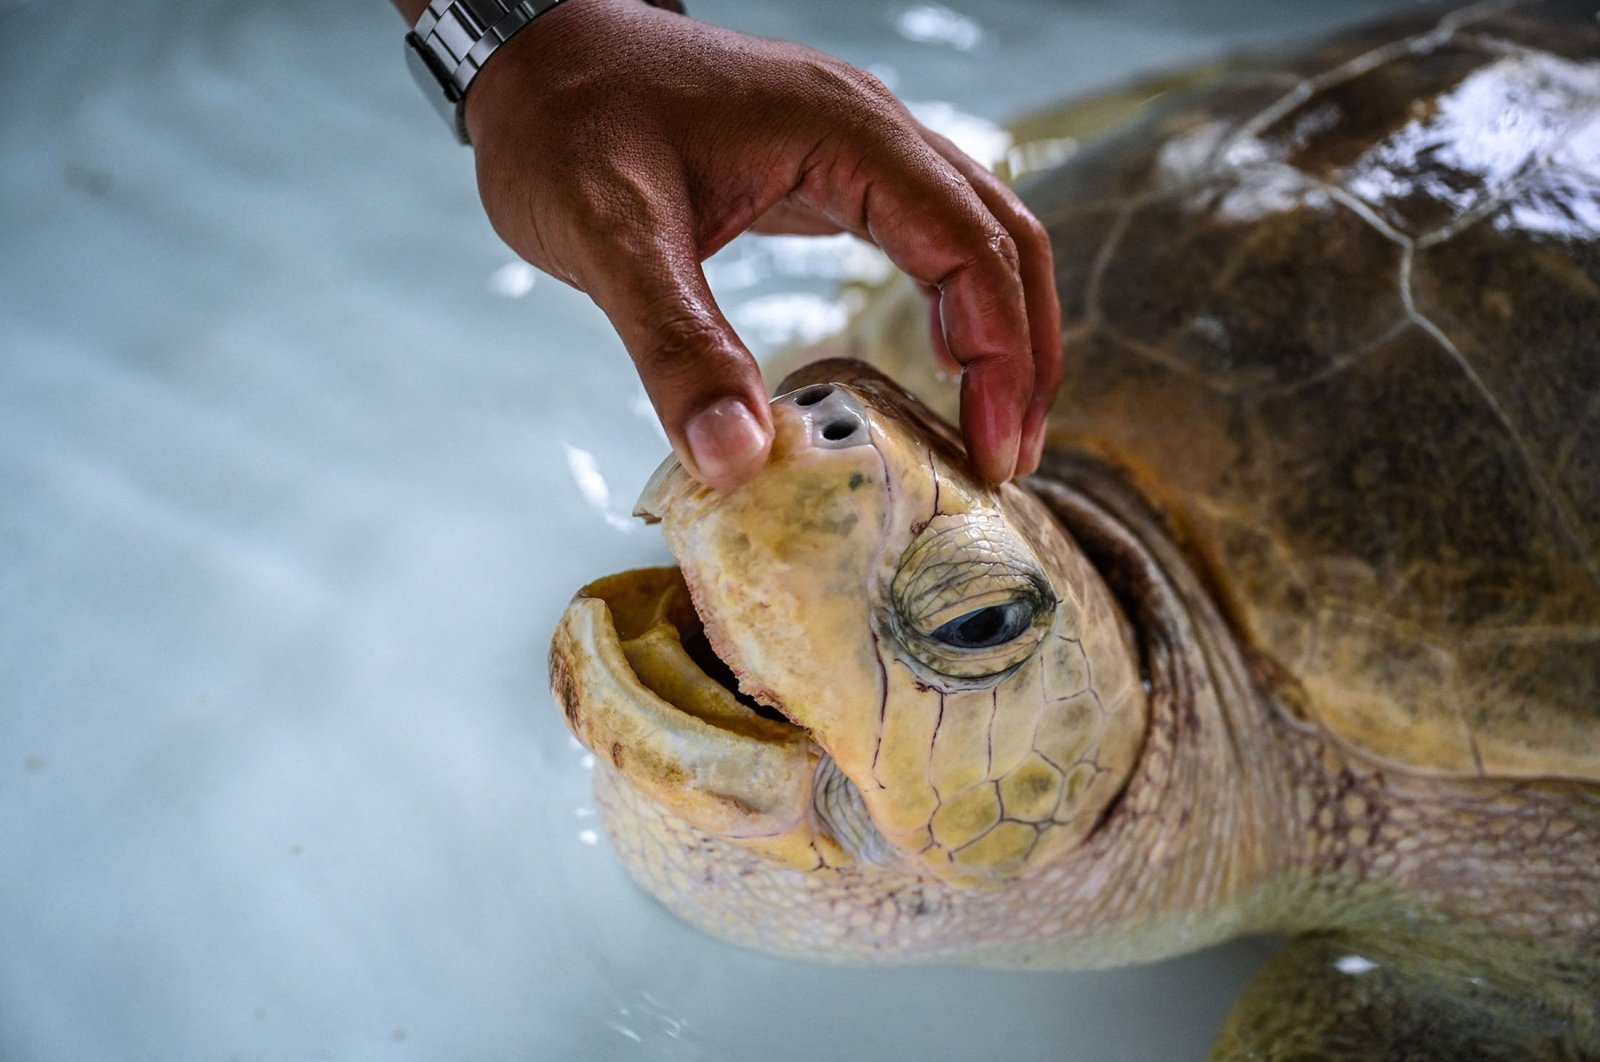 A marine biologist inspects a sea turtle at the Phuket Marine Biological Center in Phuket, Thailand, Nov. 23, 2021. (AFP Photo)